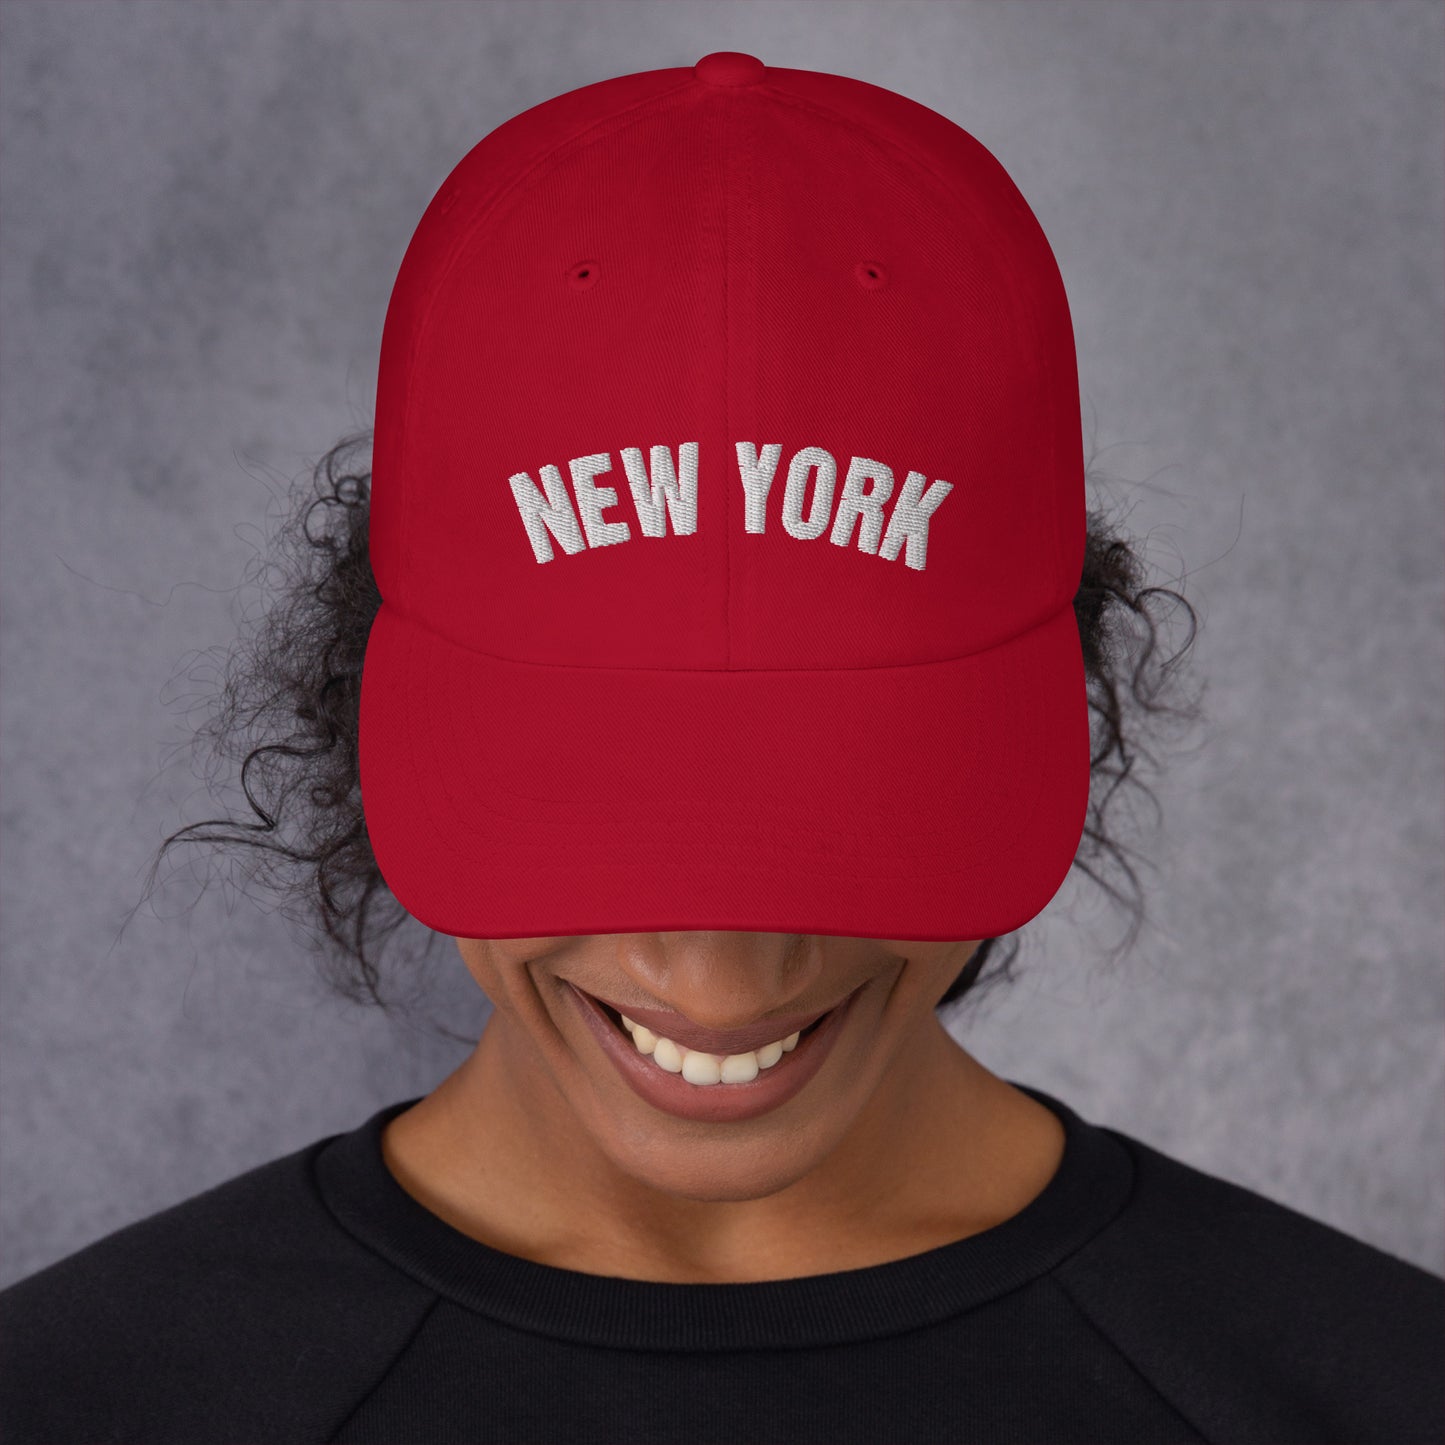 New York Baseball Cap - Red